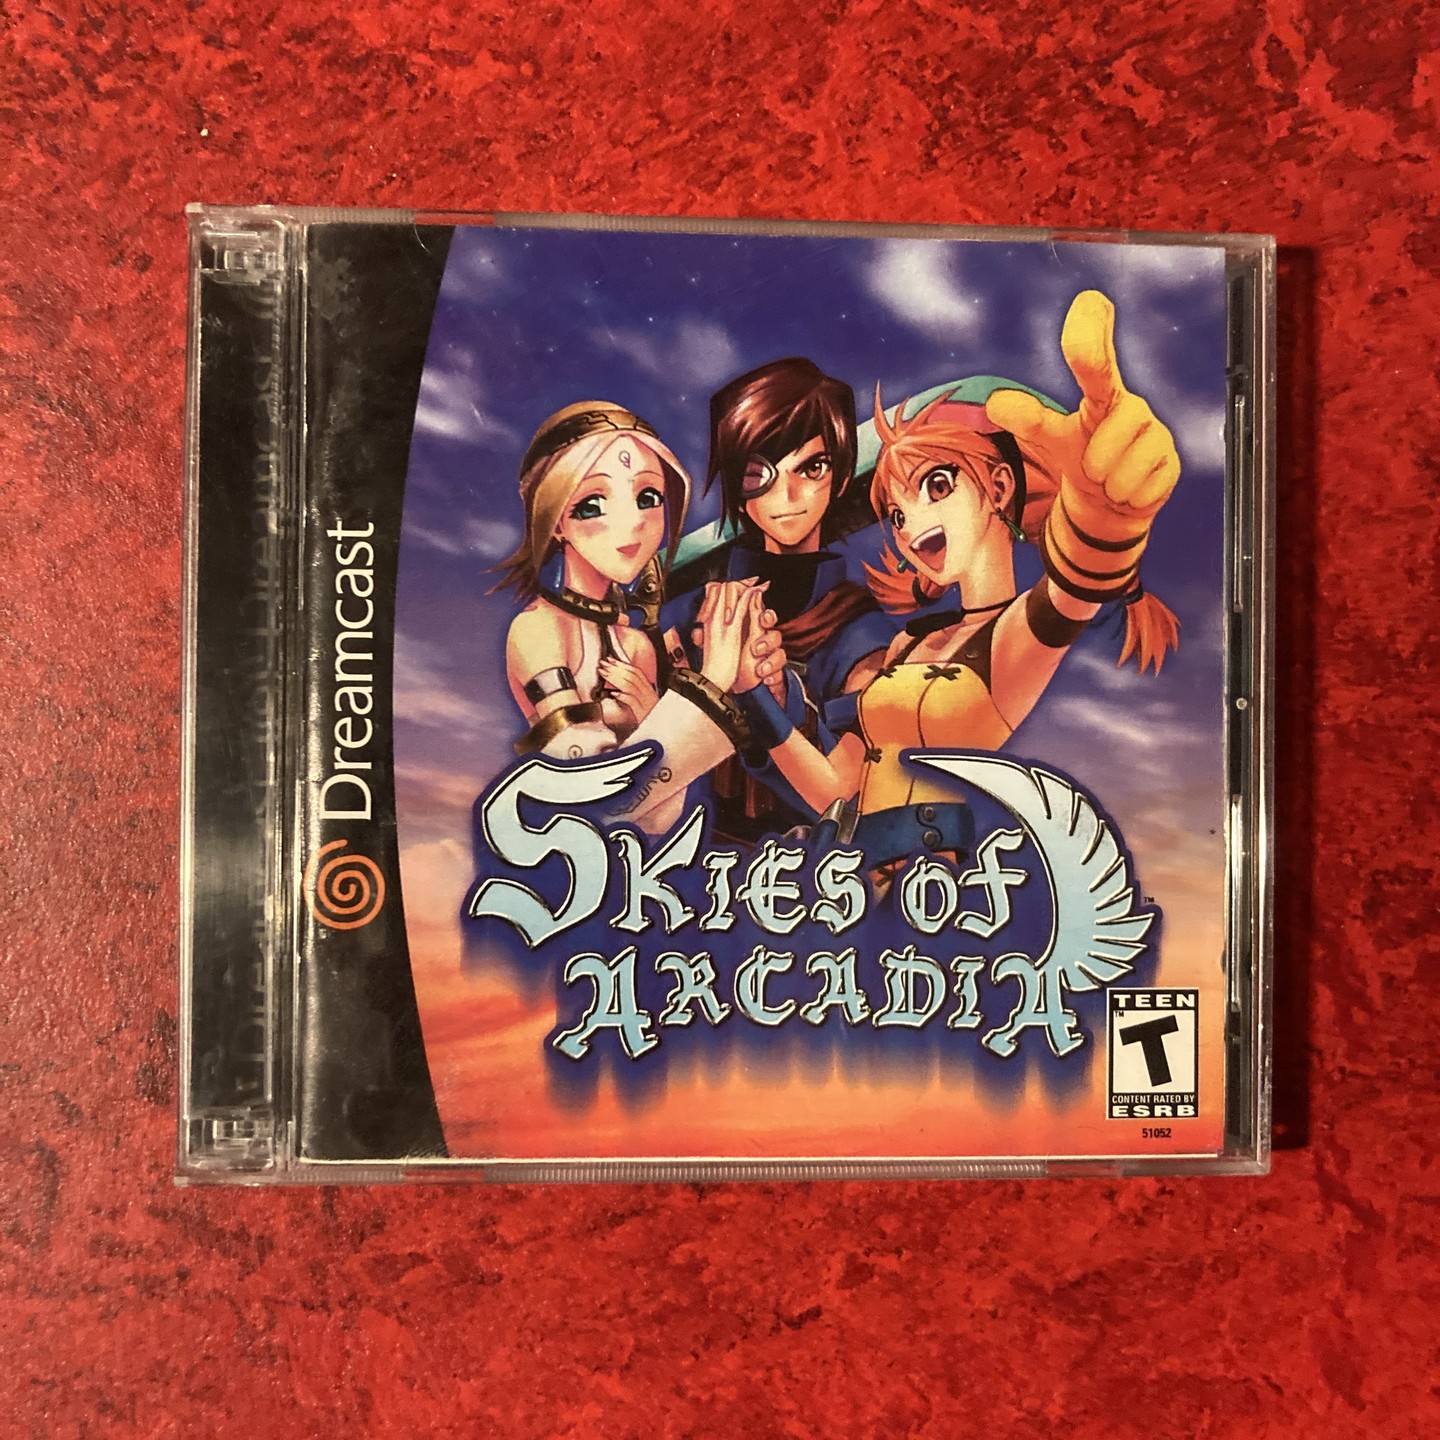  Skies of Arcadia Soundtrack (Dreamcast)